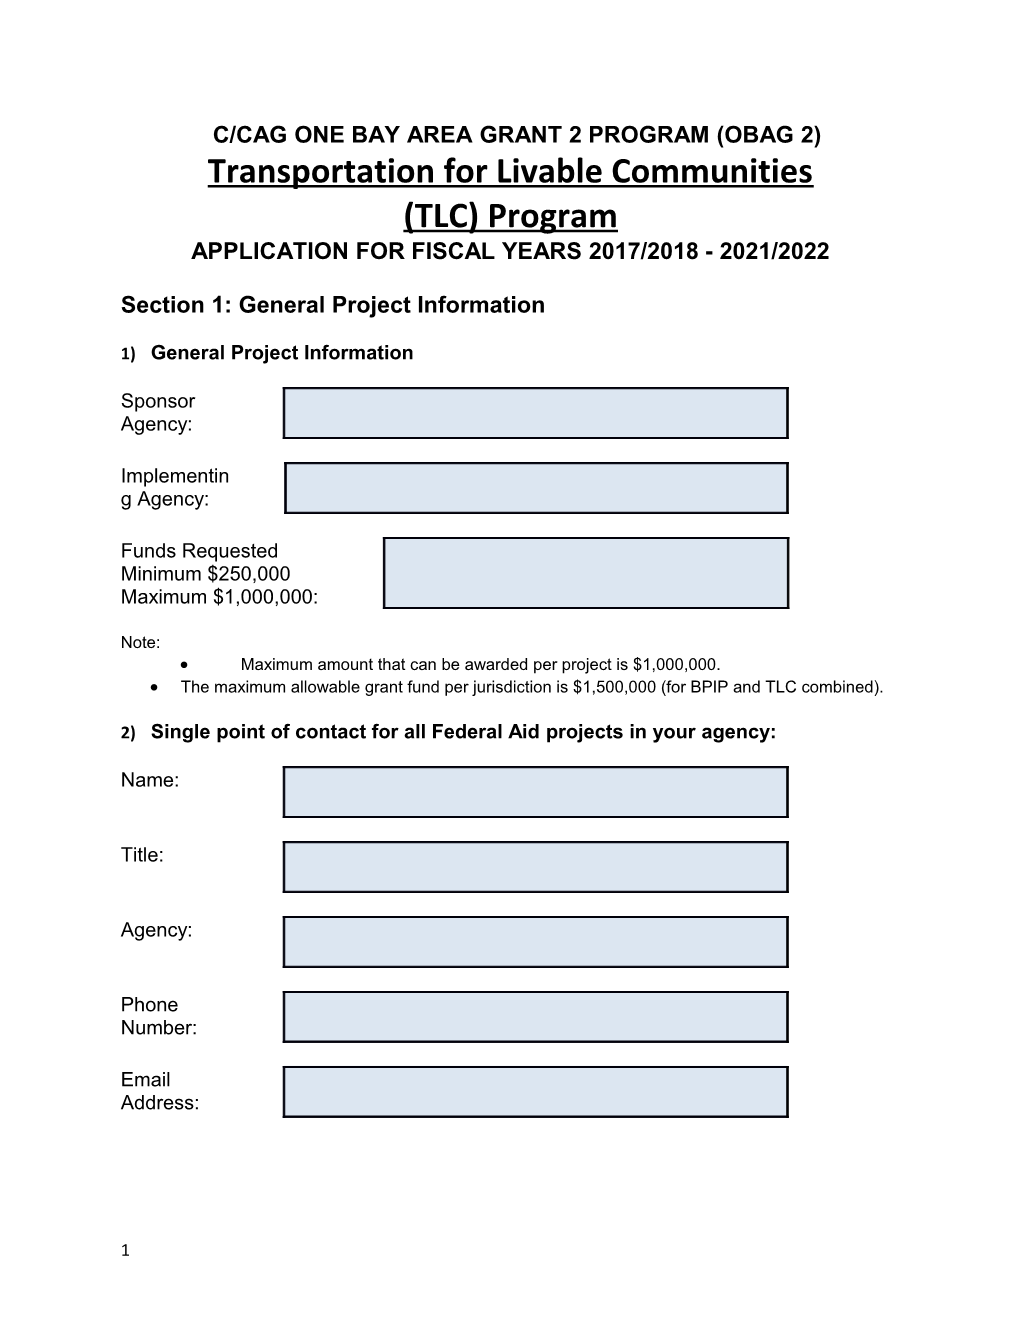 Transportation for Livable Communities